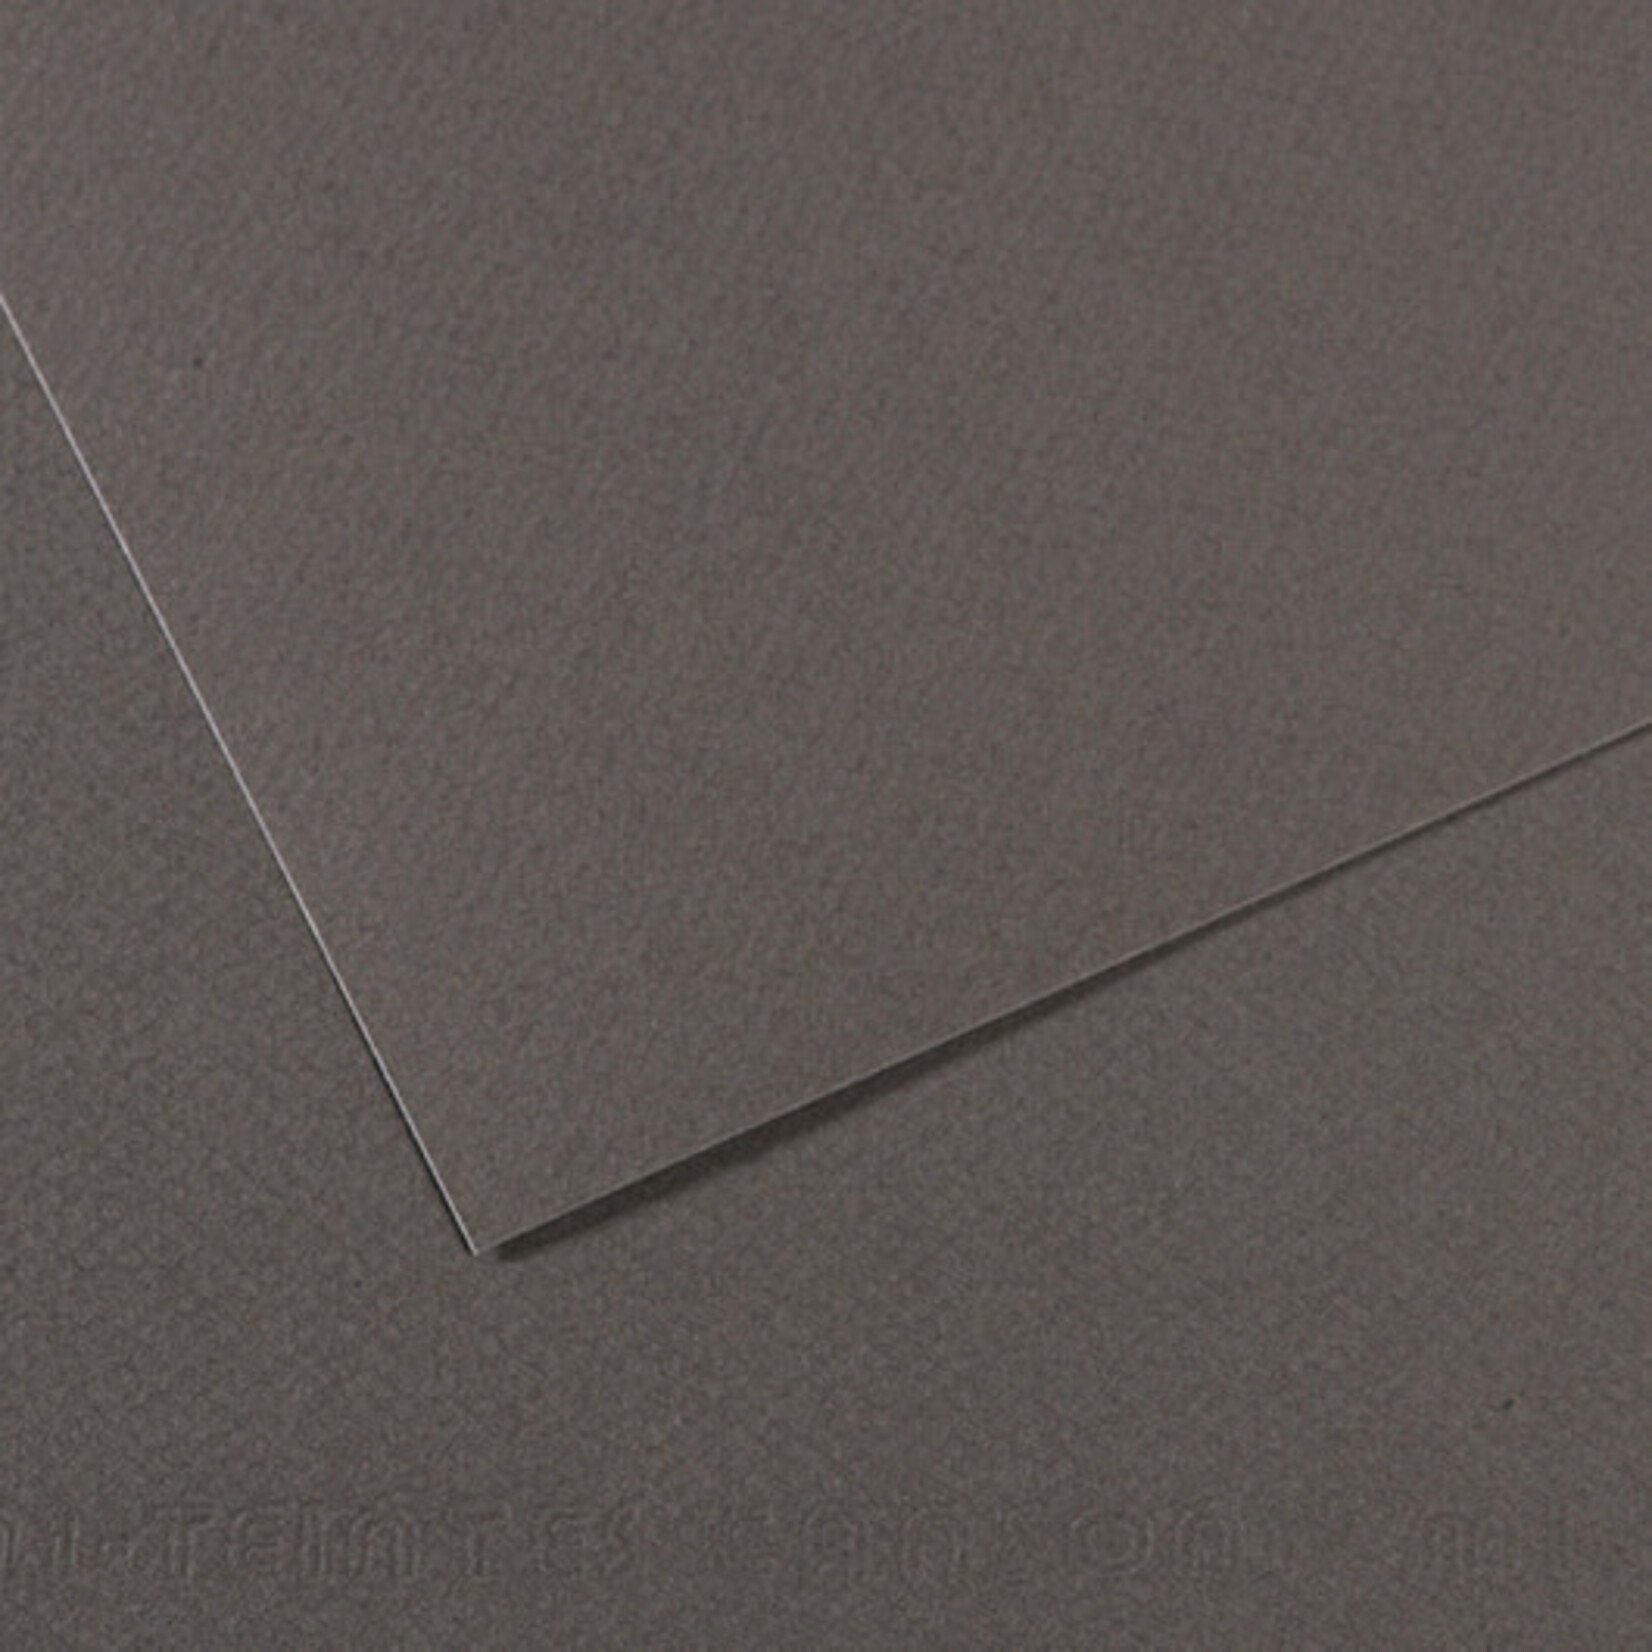 Canson Mi-Teintes Paper Sheets, 19'' x 25'', Dark Gray